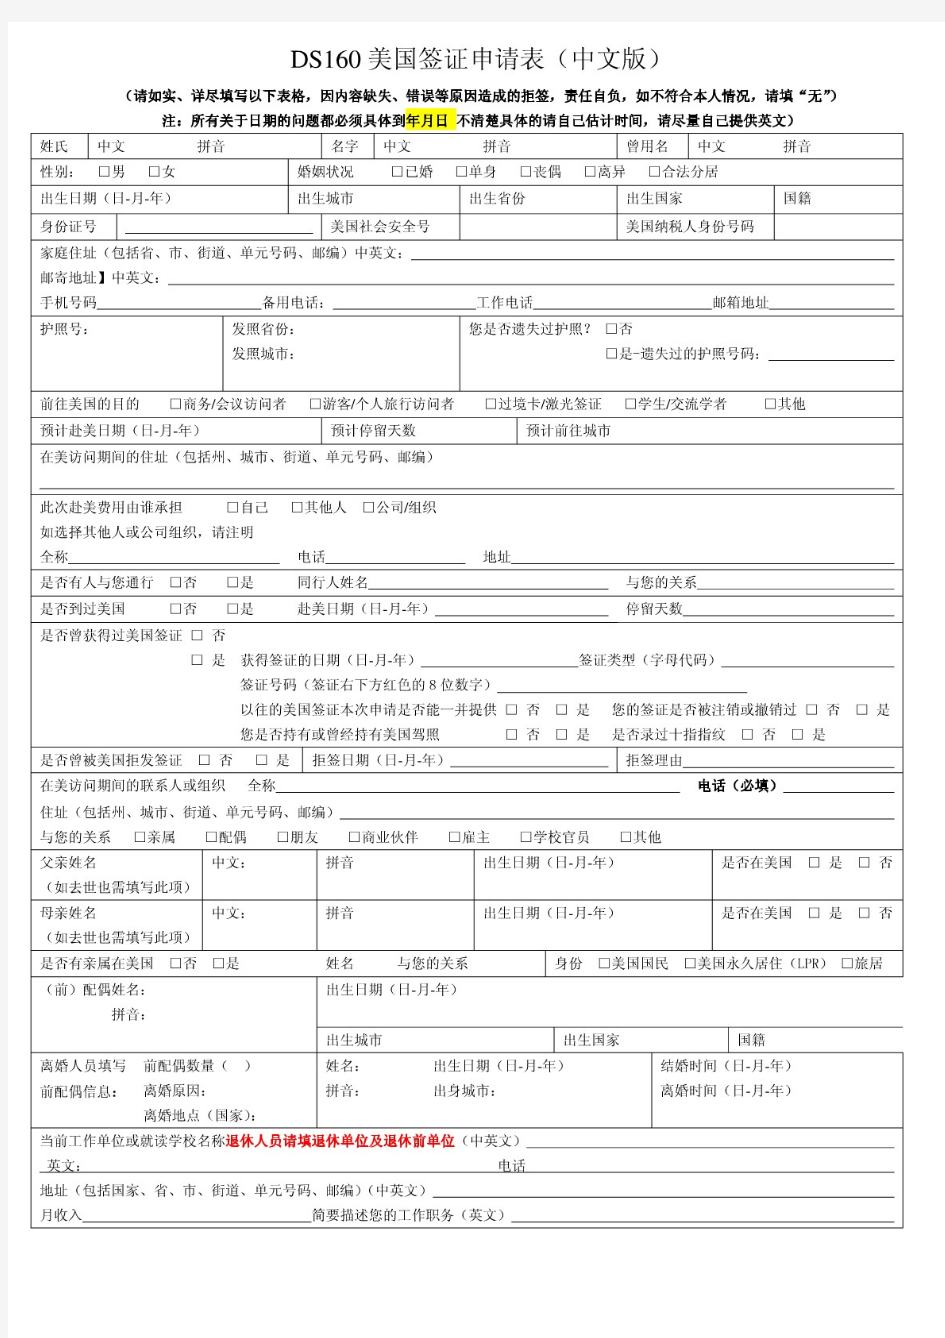 DS160美国签证申请表(中文版)